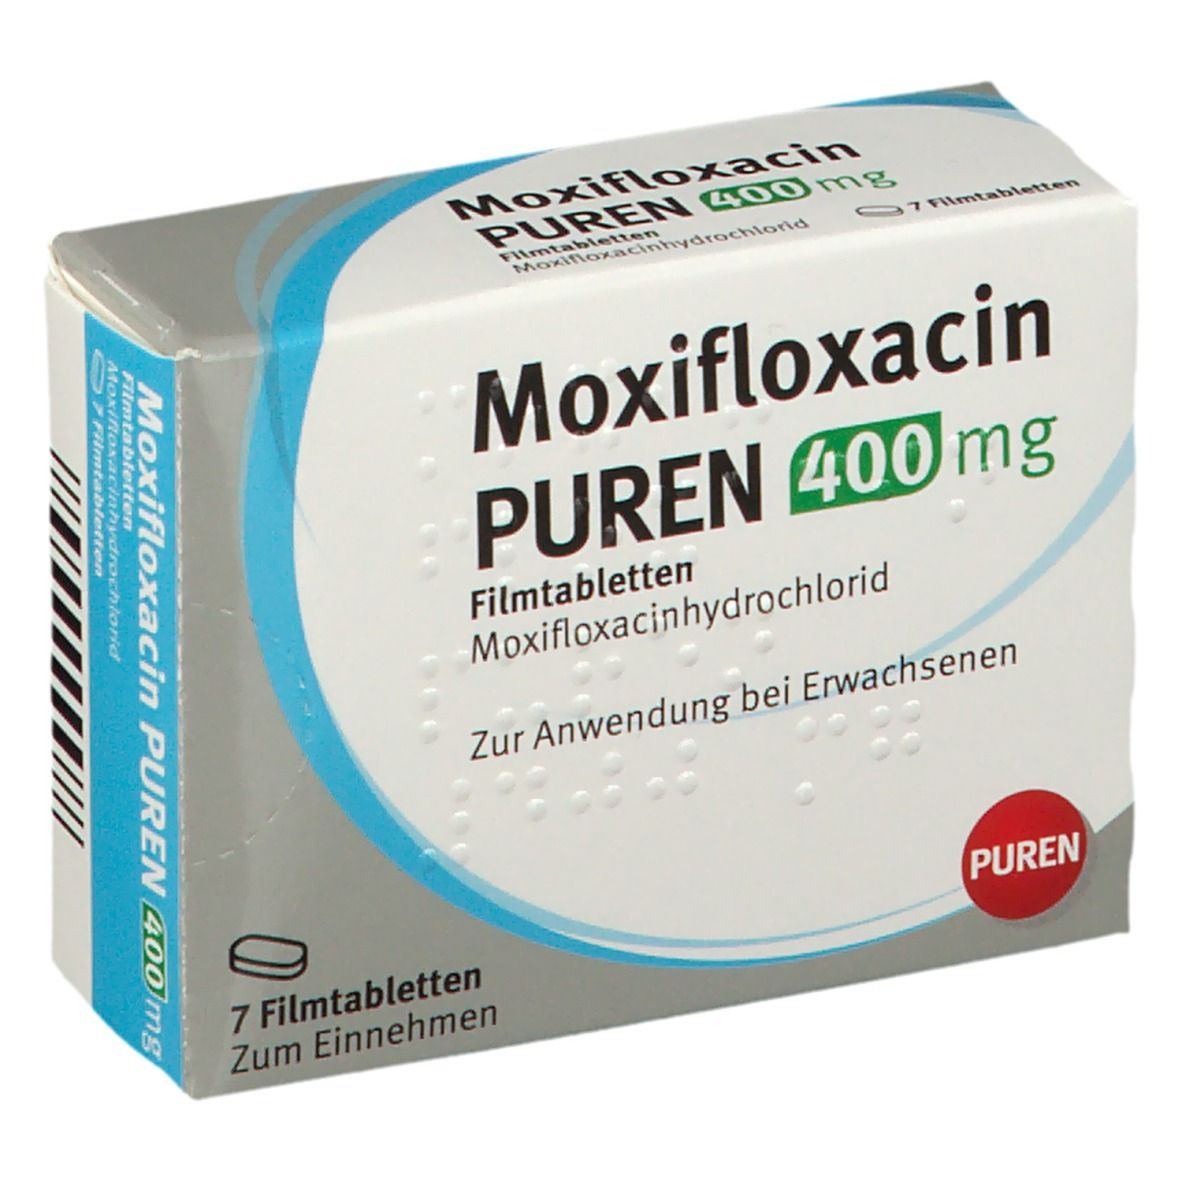 Moxifloxacin PUREN 400 mg